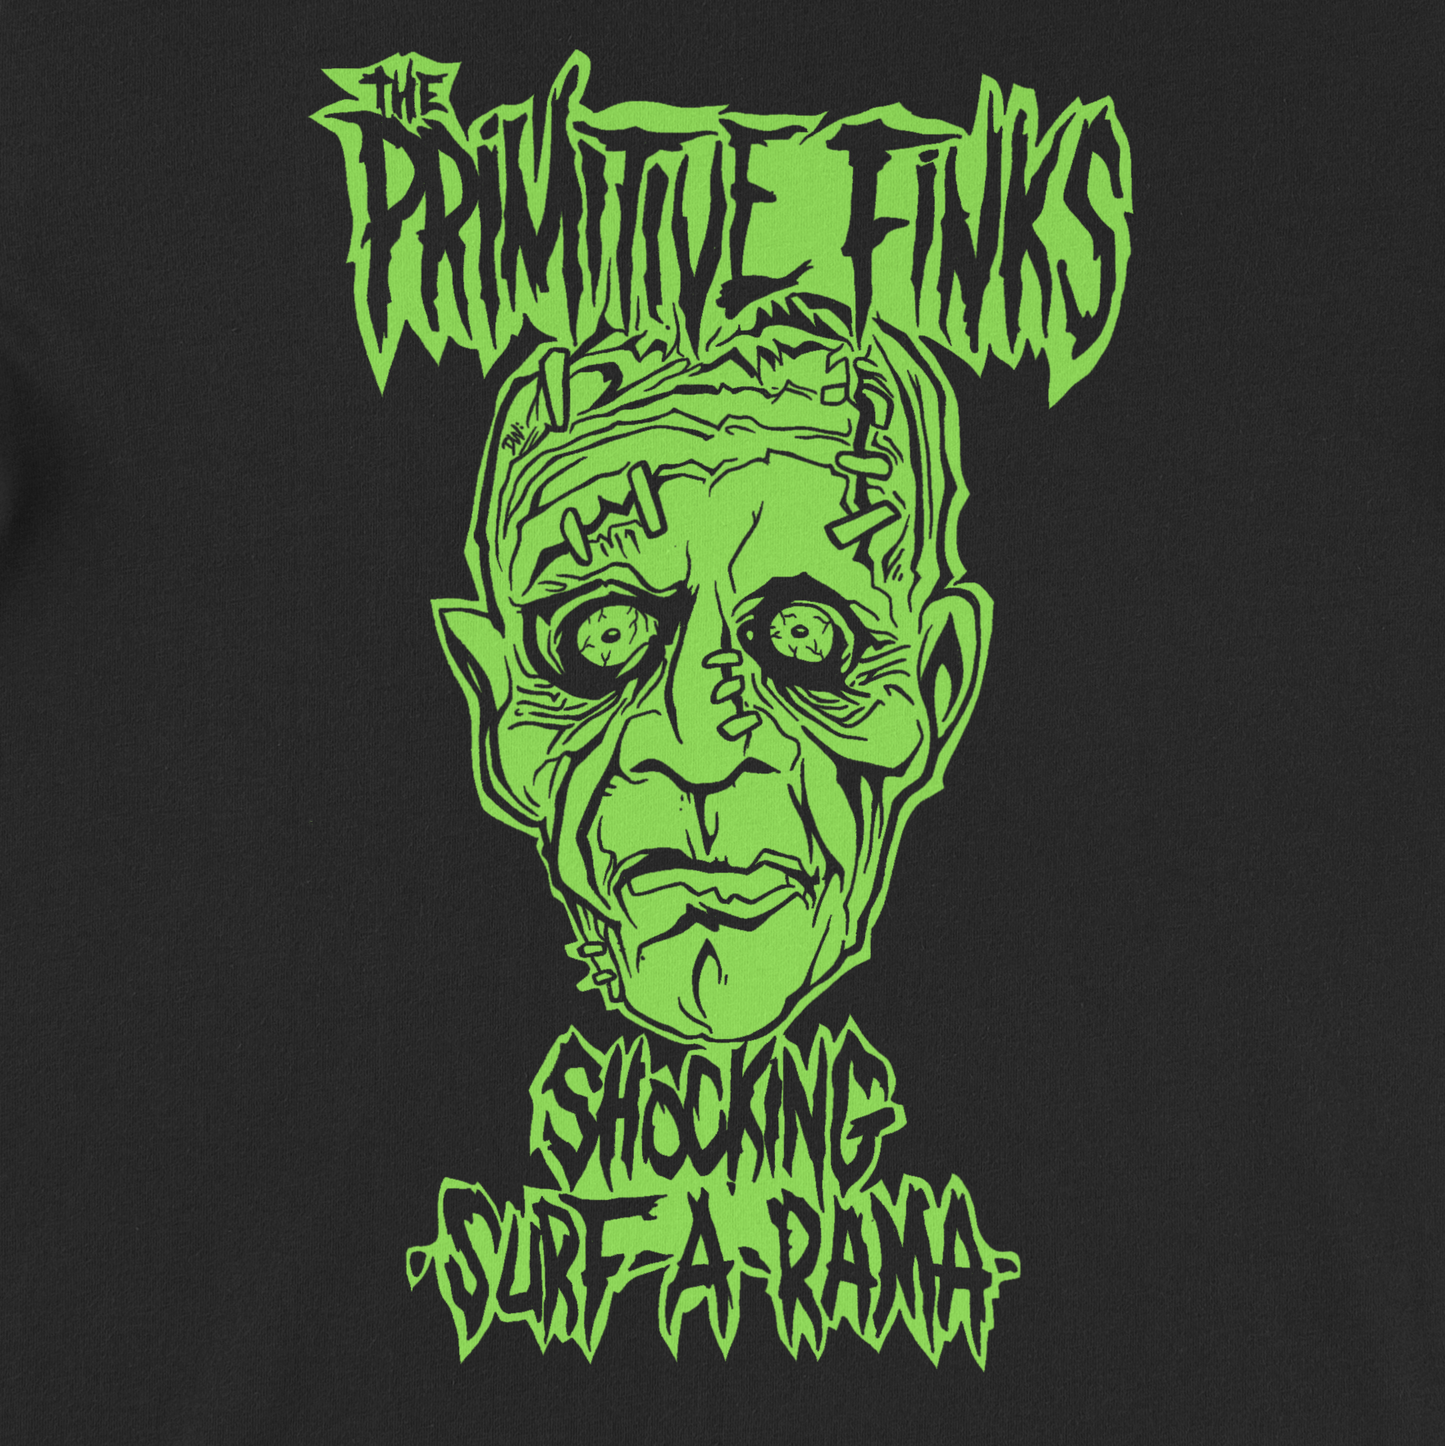 The Primitive Finks "Shocking Surf-A-Rama" T